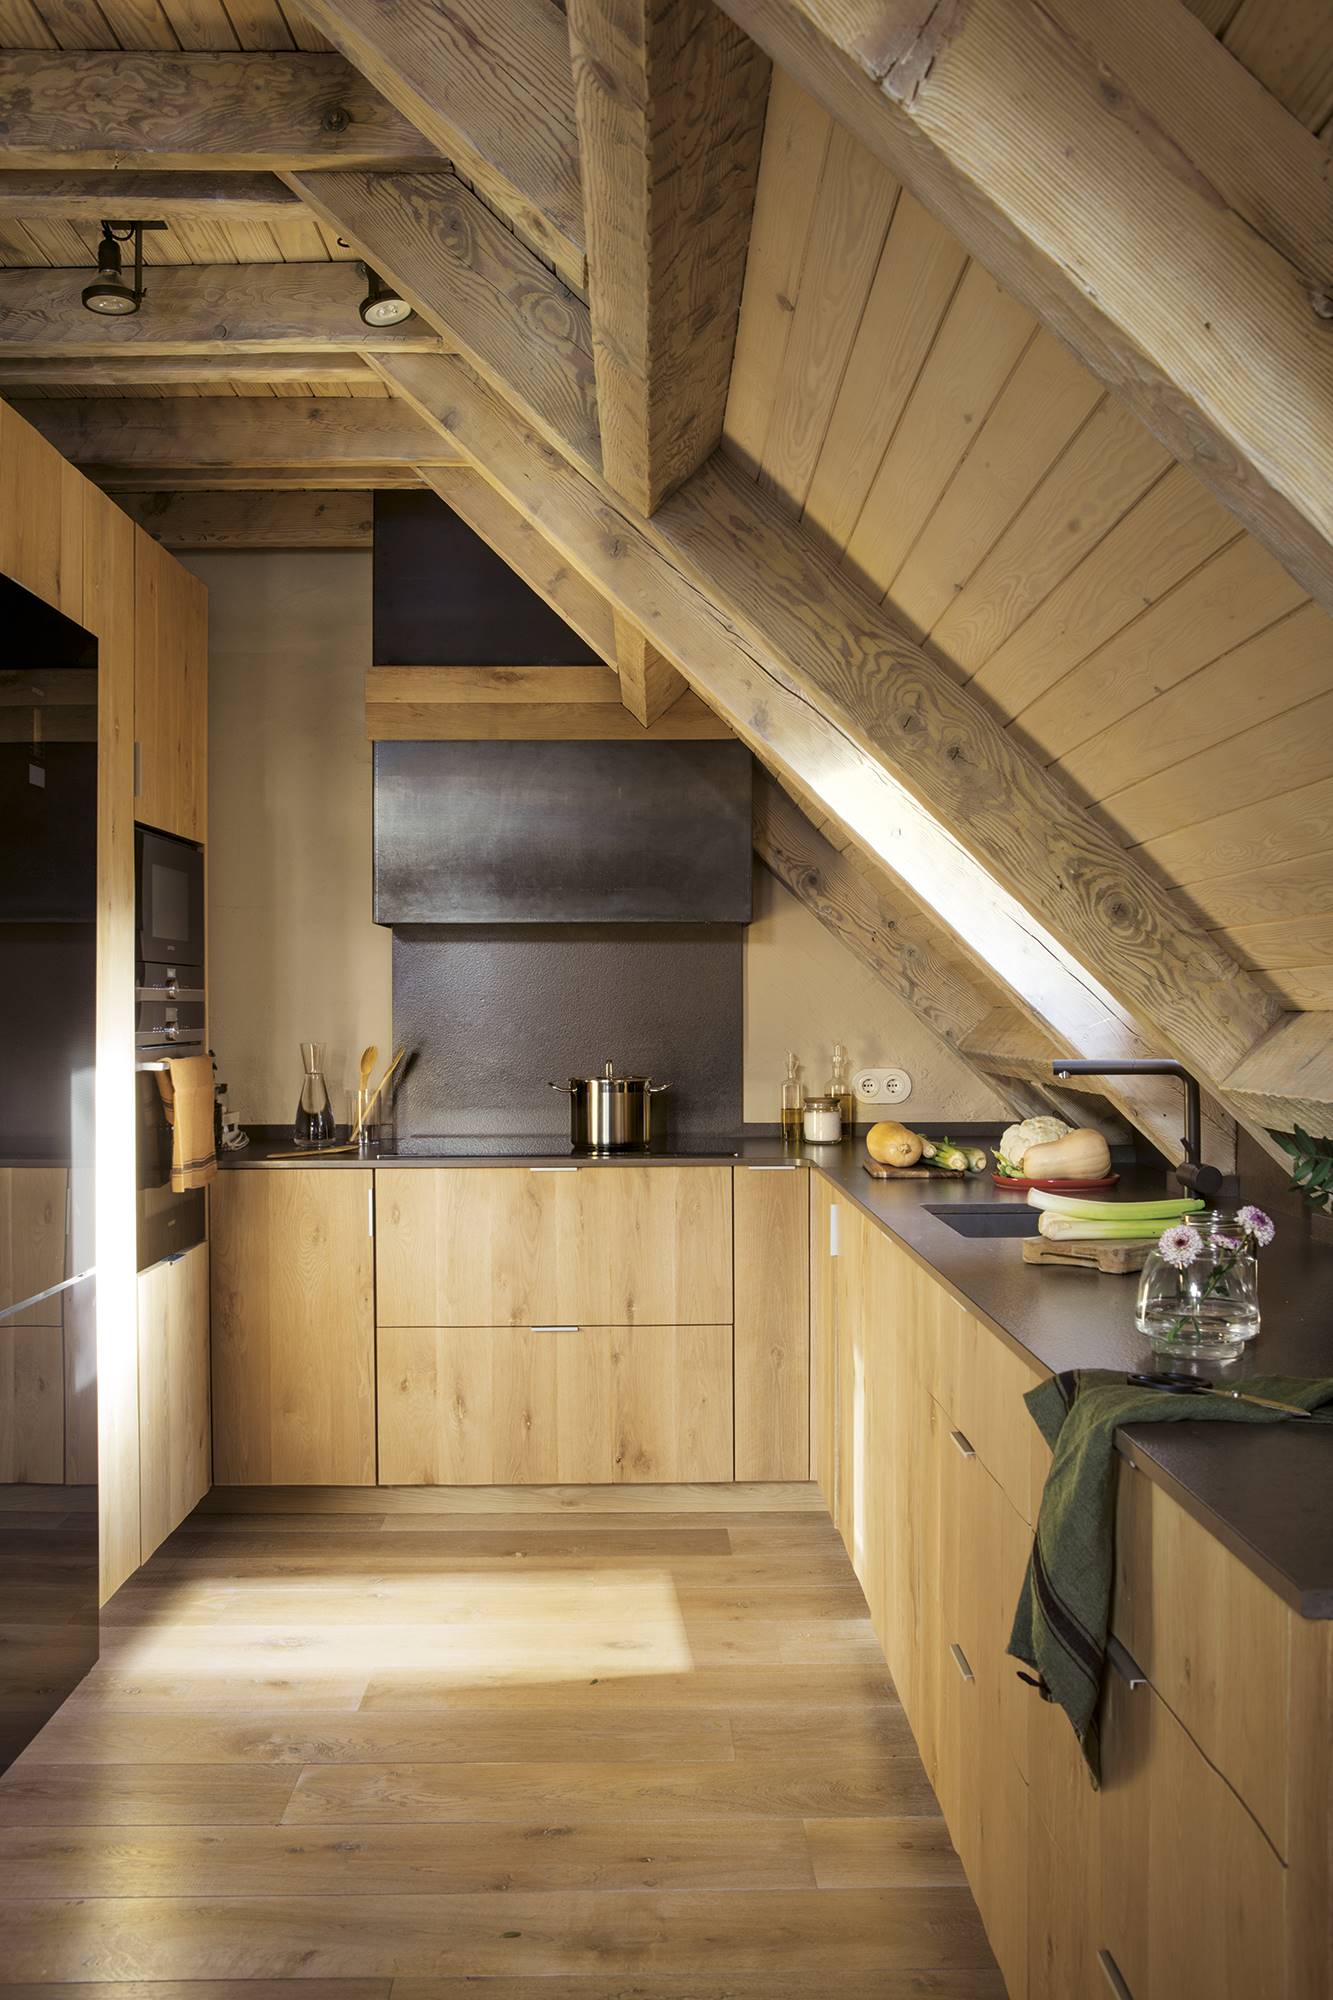 Cocina de madera con techos abuhardillado de madera. 